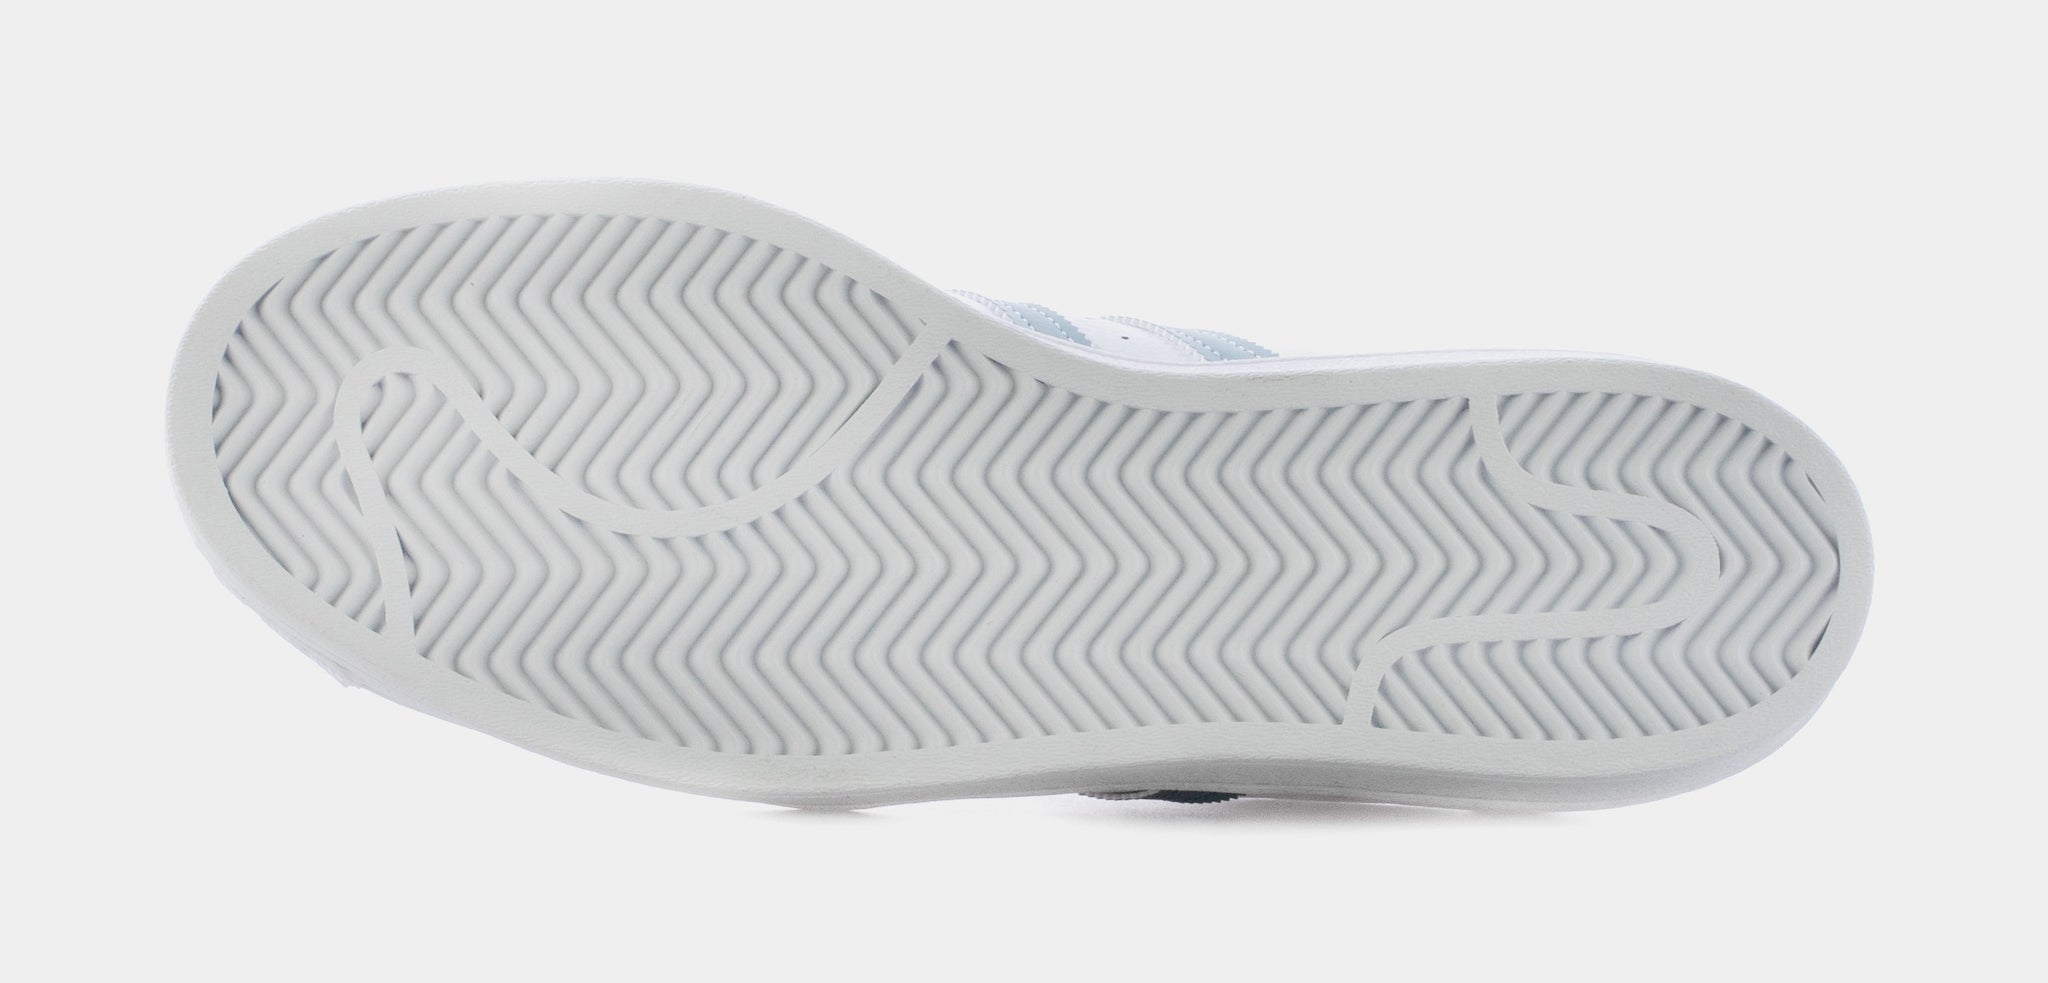 Adidas Superstar Sky Blue/White Men's Shoes, Size: 8